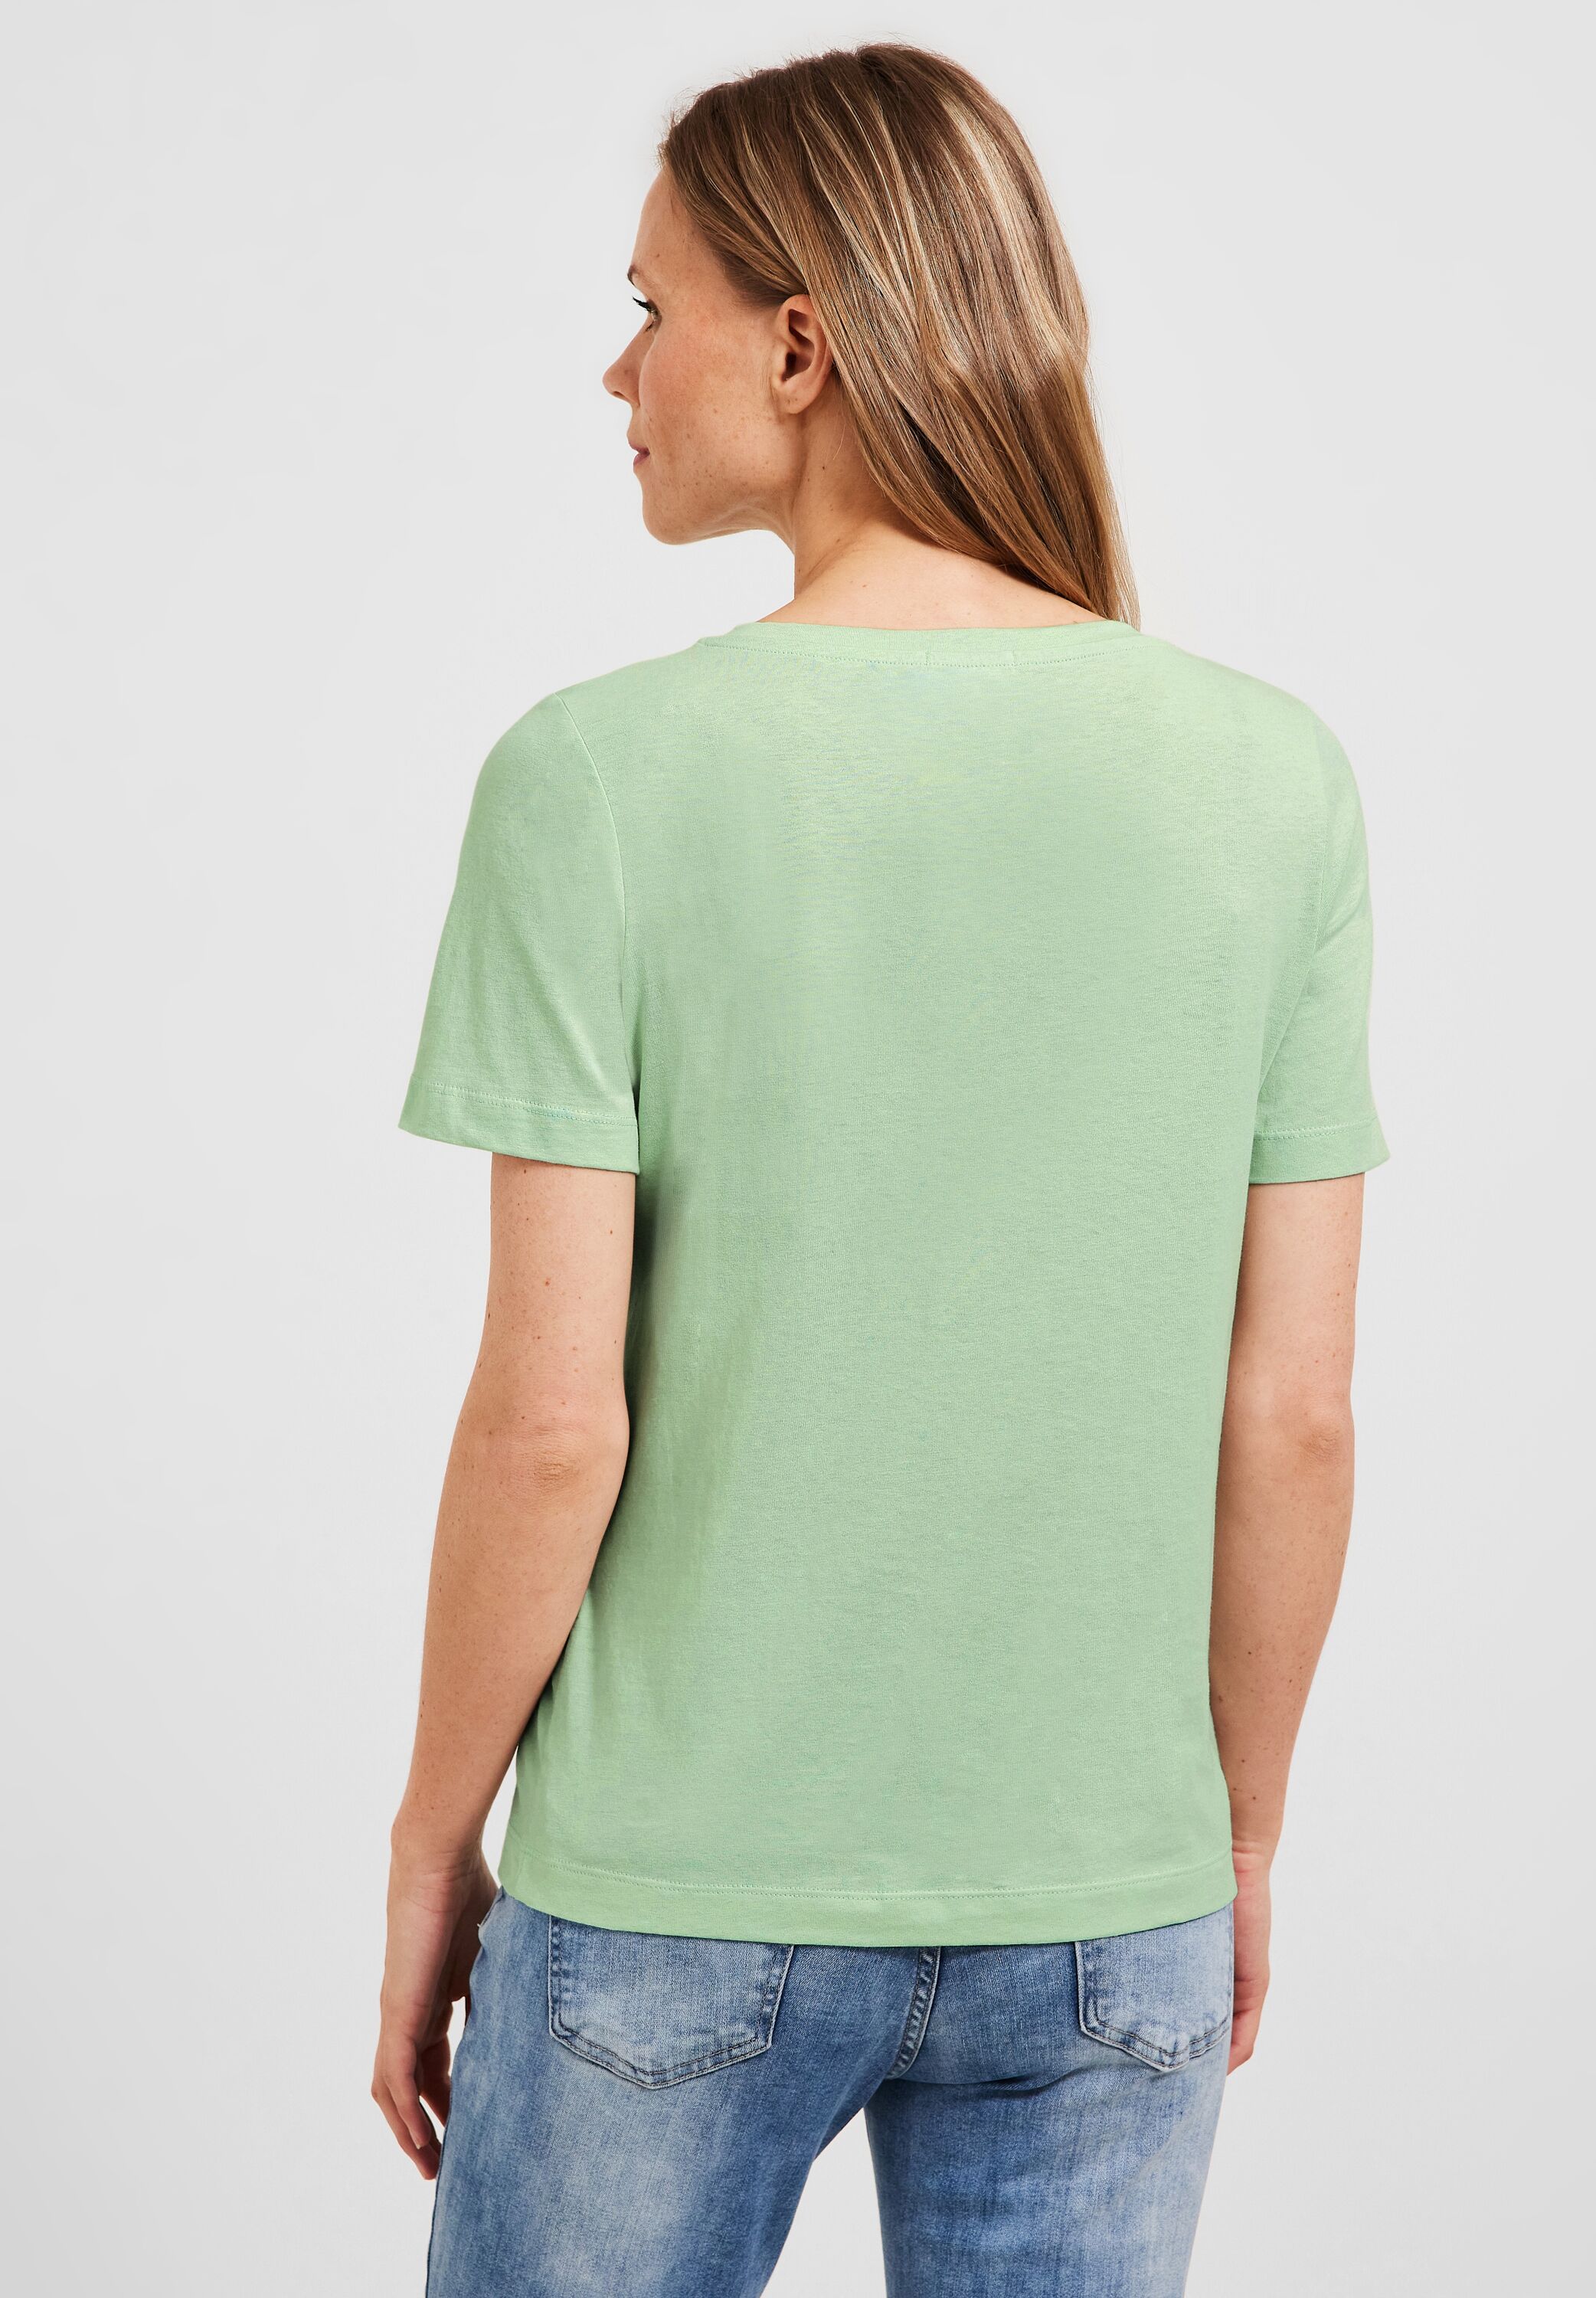 reduziert - im B320051-24851 CONCEPT Green T-Shirt SALE CECIL Salvia Fresh in Mode